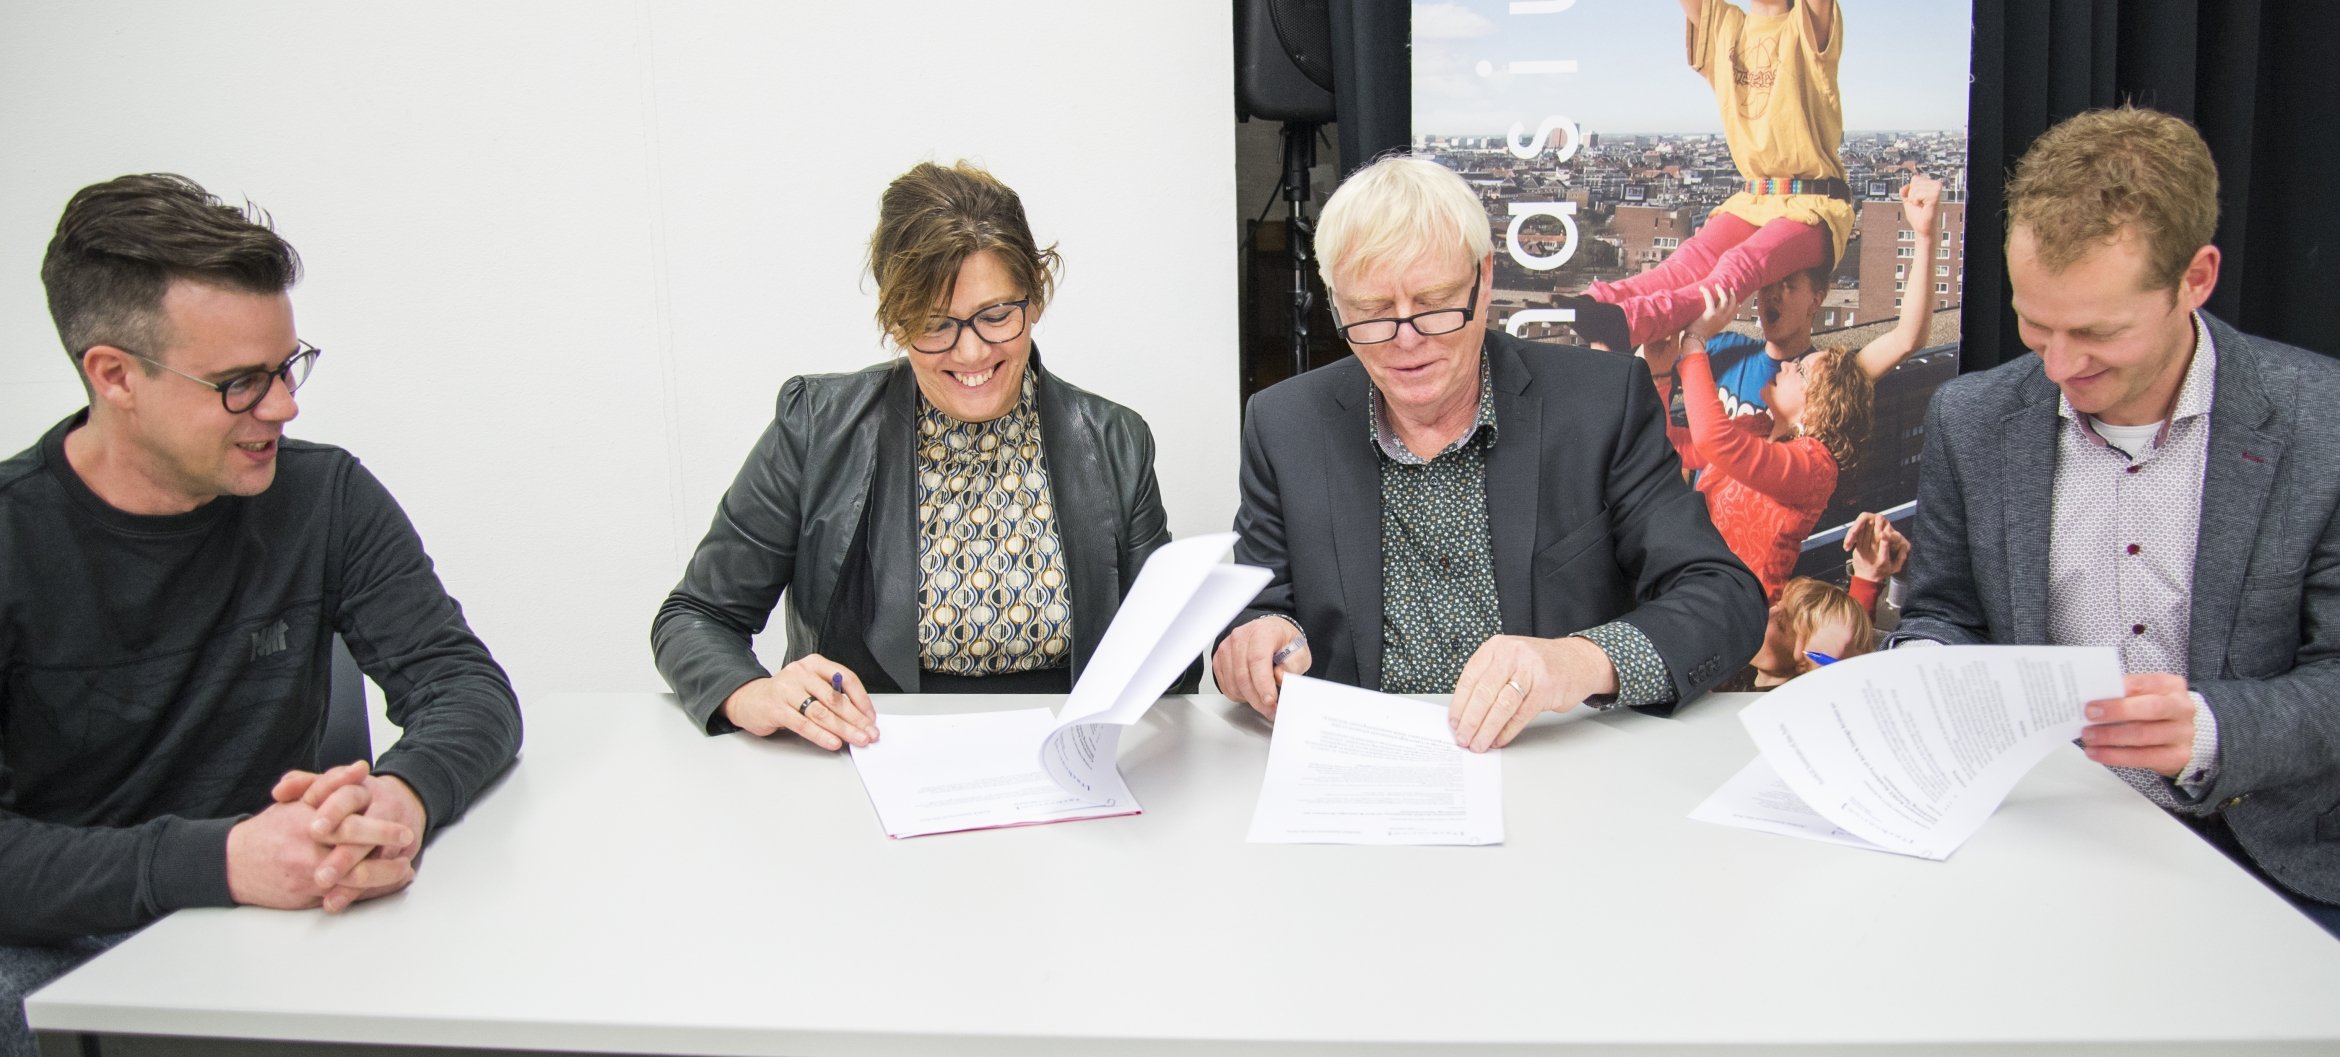 ArtEZ en Stichting Technasium bezegelen samenwerking in convenant